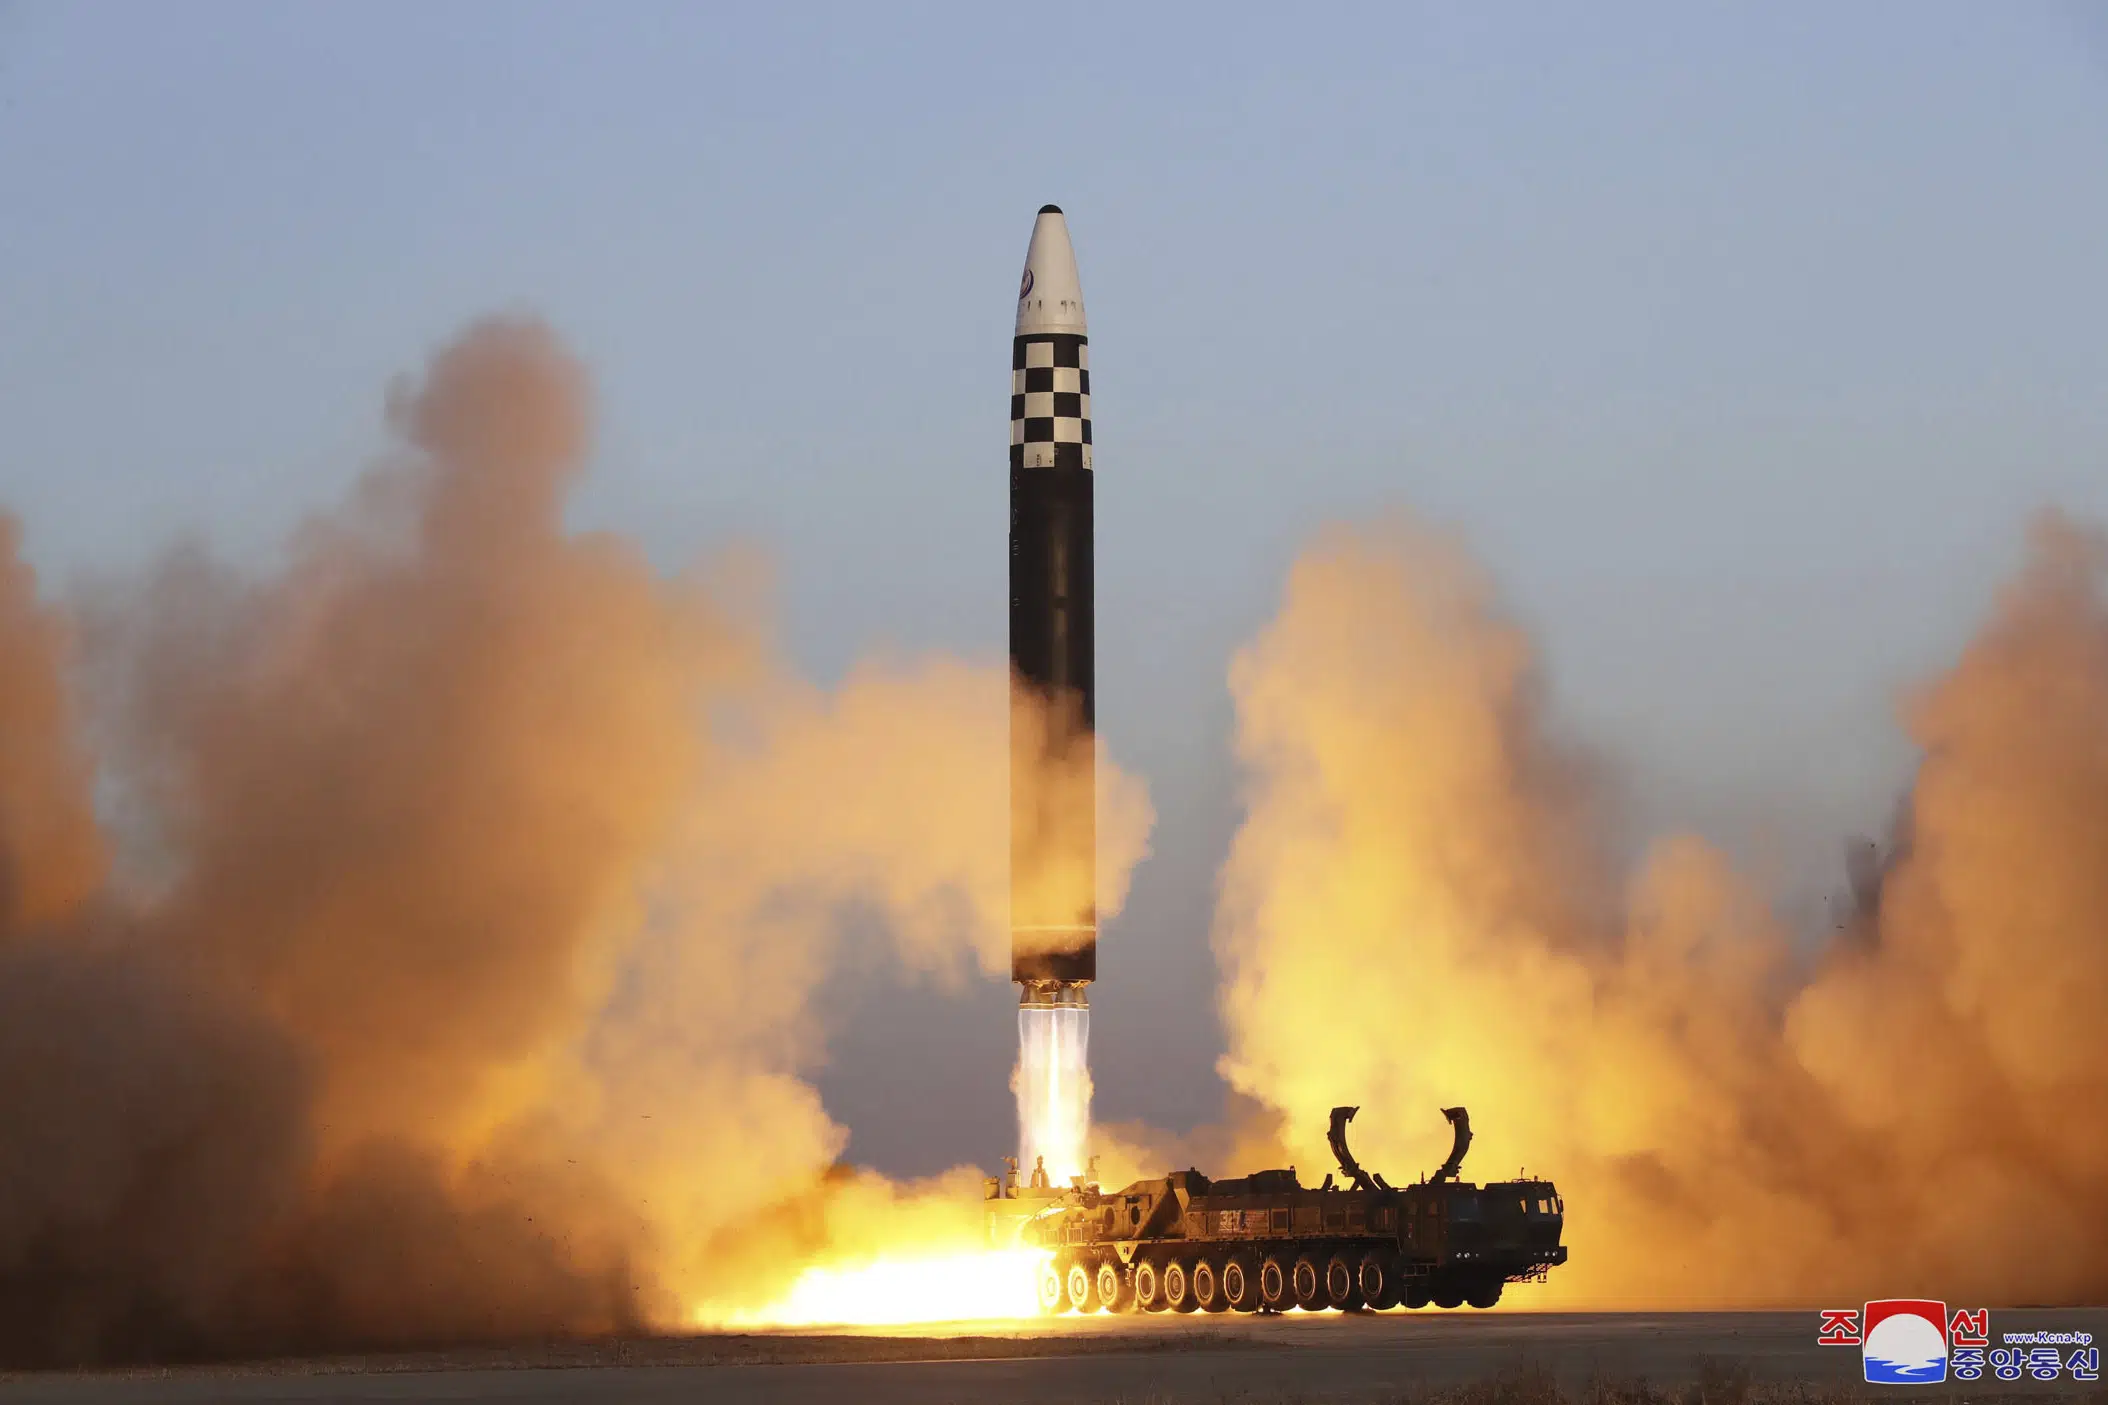 North Korea says ICBM test aimed to strike fear into enemies - The Associated Press